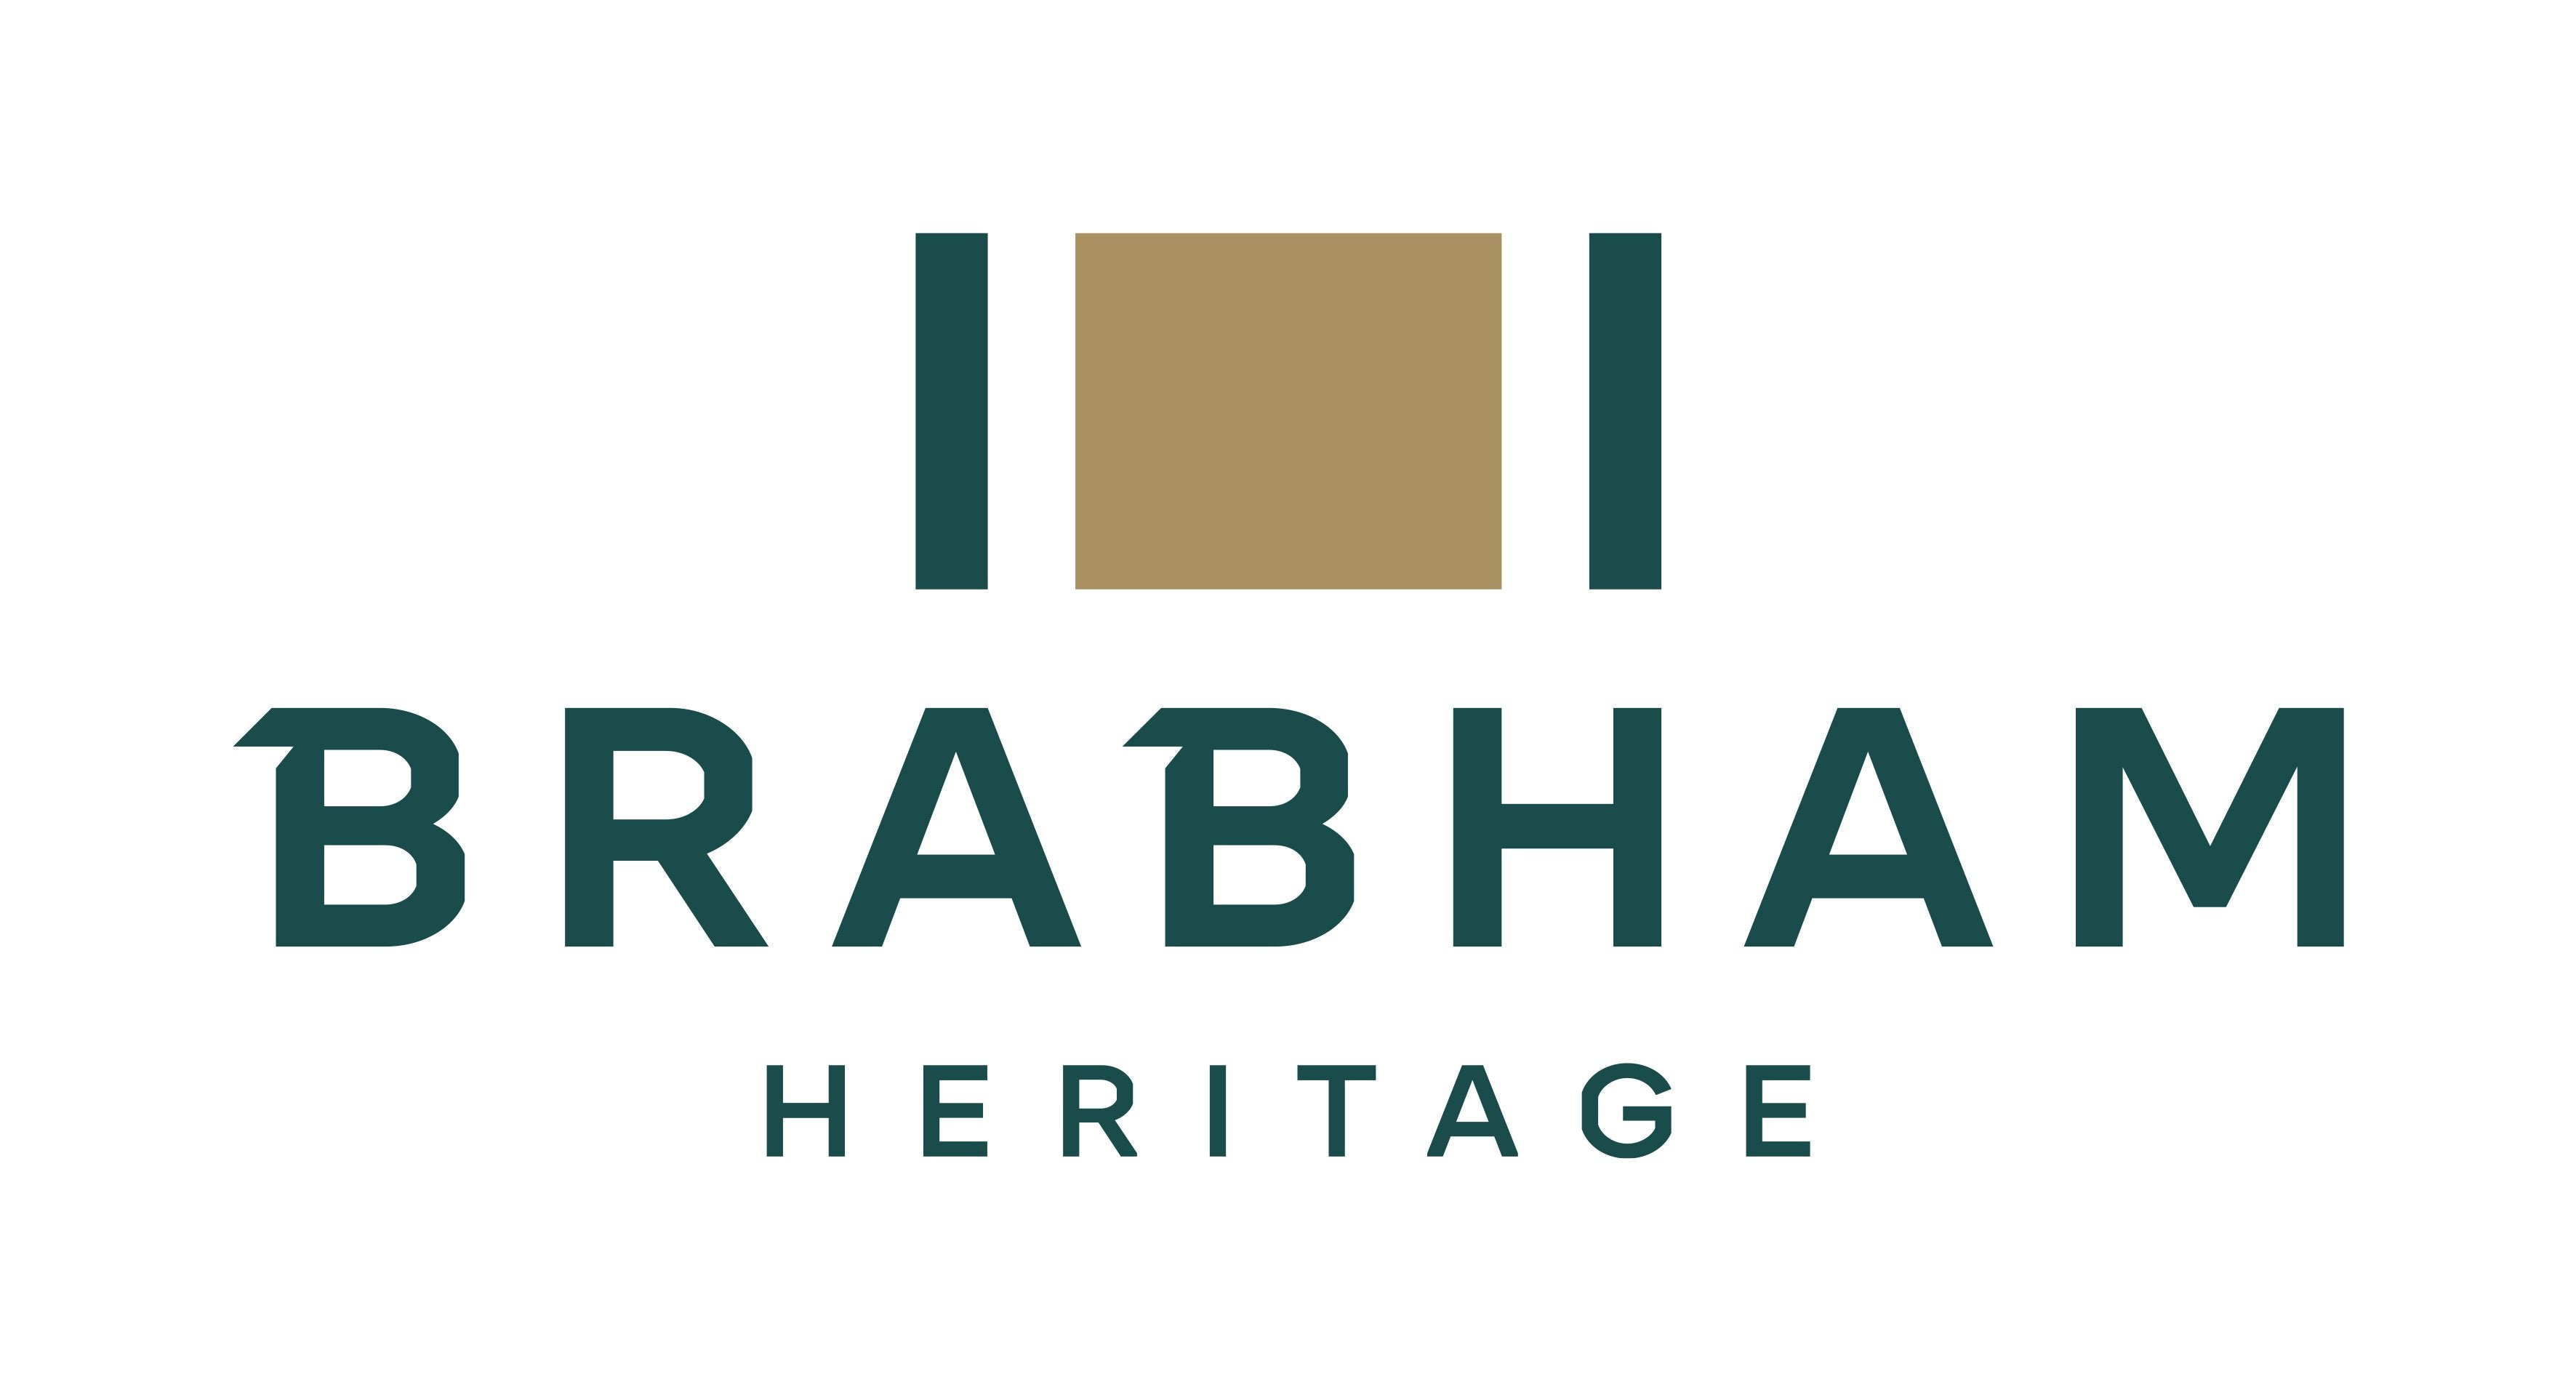 Brabham Heritage Official Merchandise